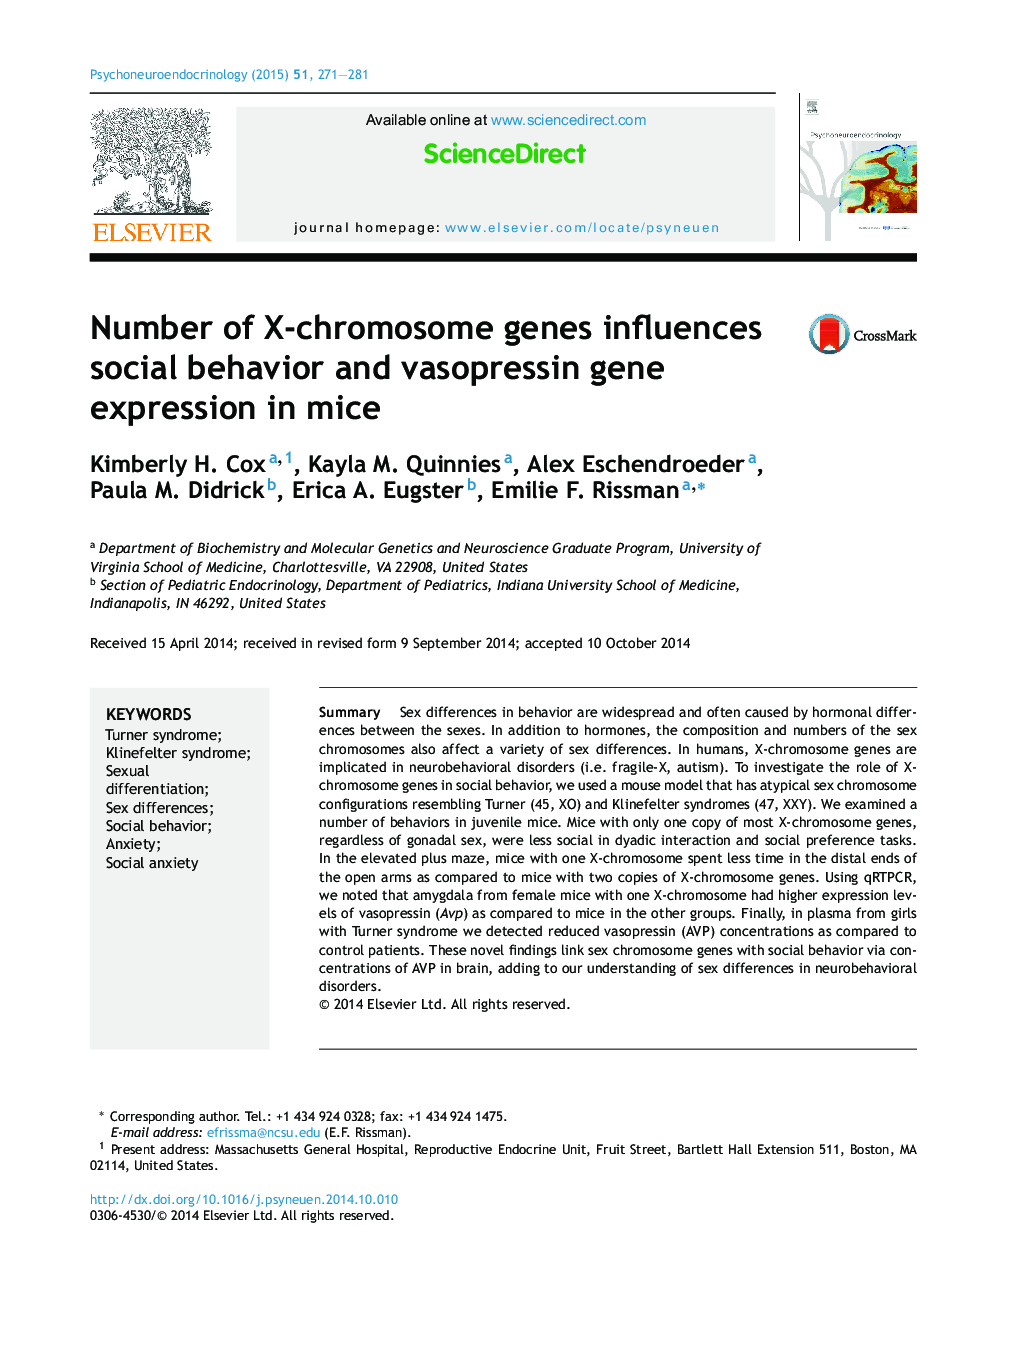 Number of X-chromosome genes influences social behavior and vasopressin gene expression in mice